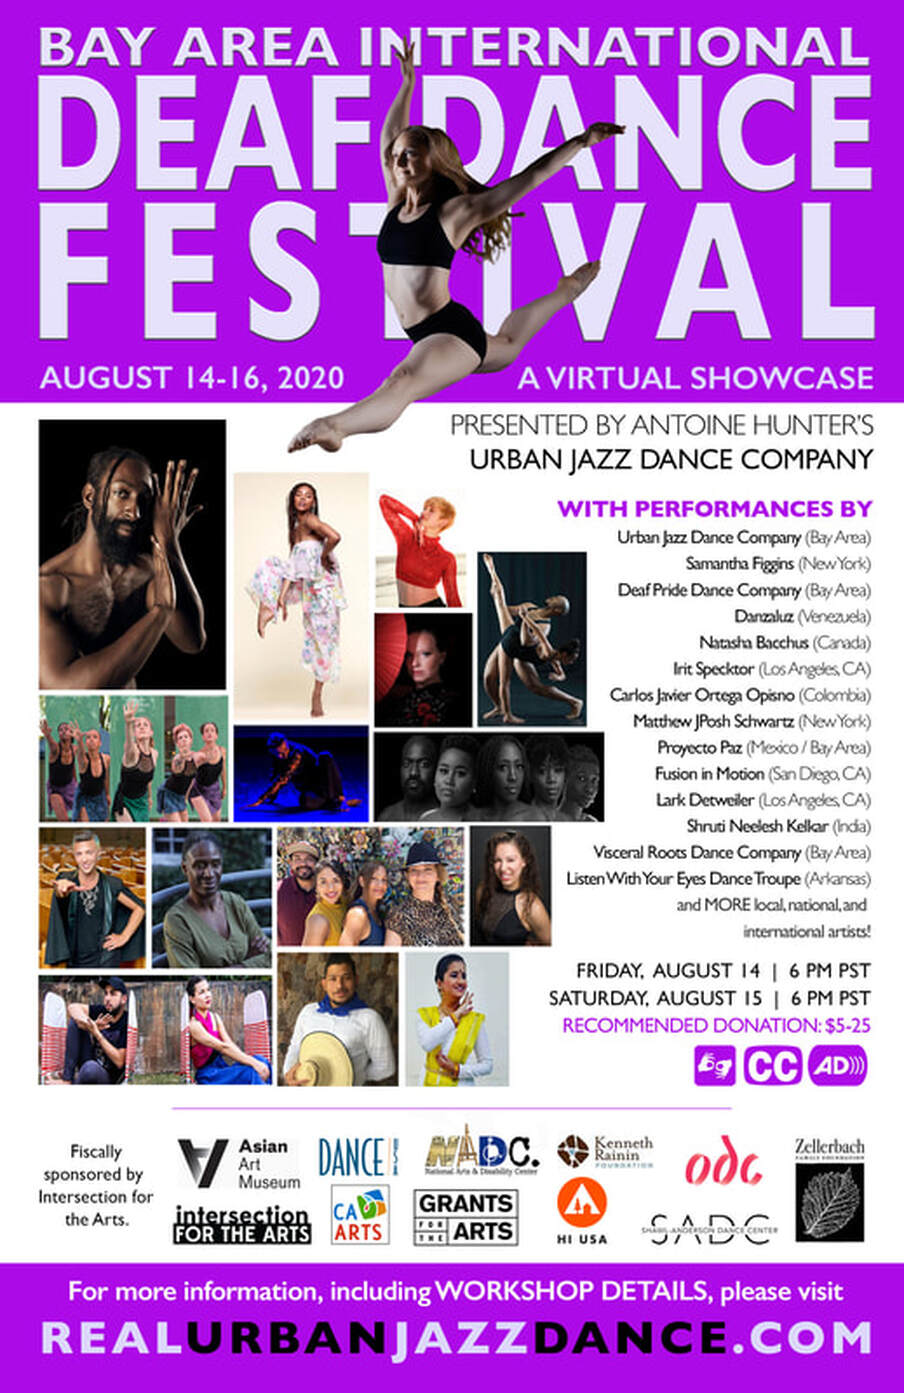 Bay Area International Deaf Dance Festival 2020